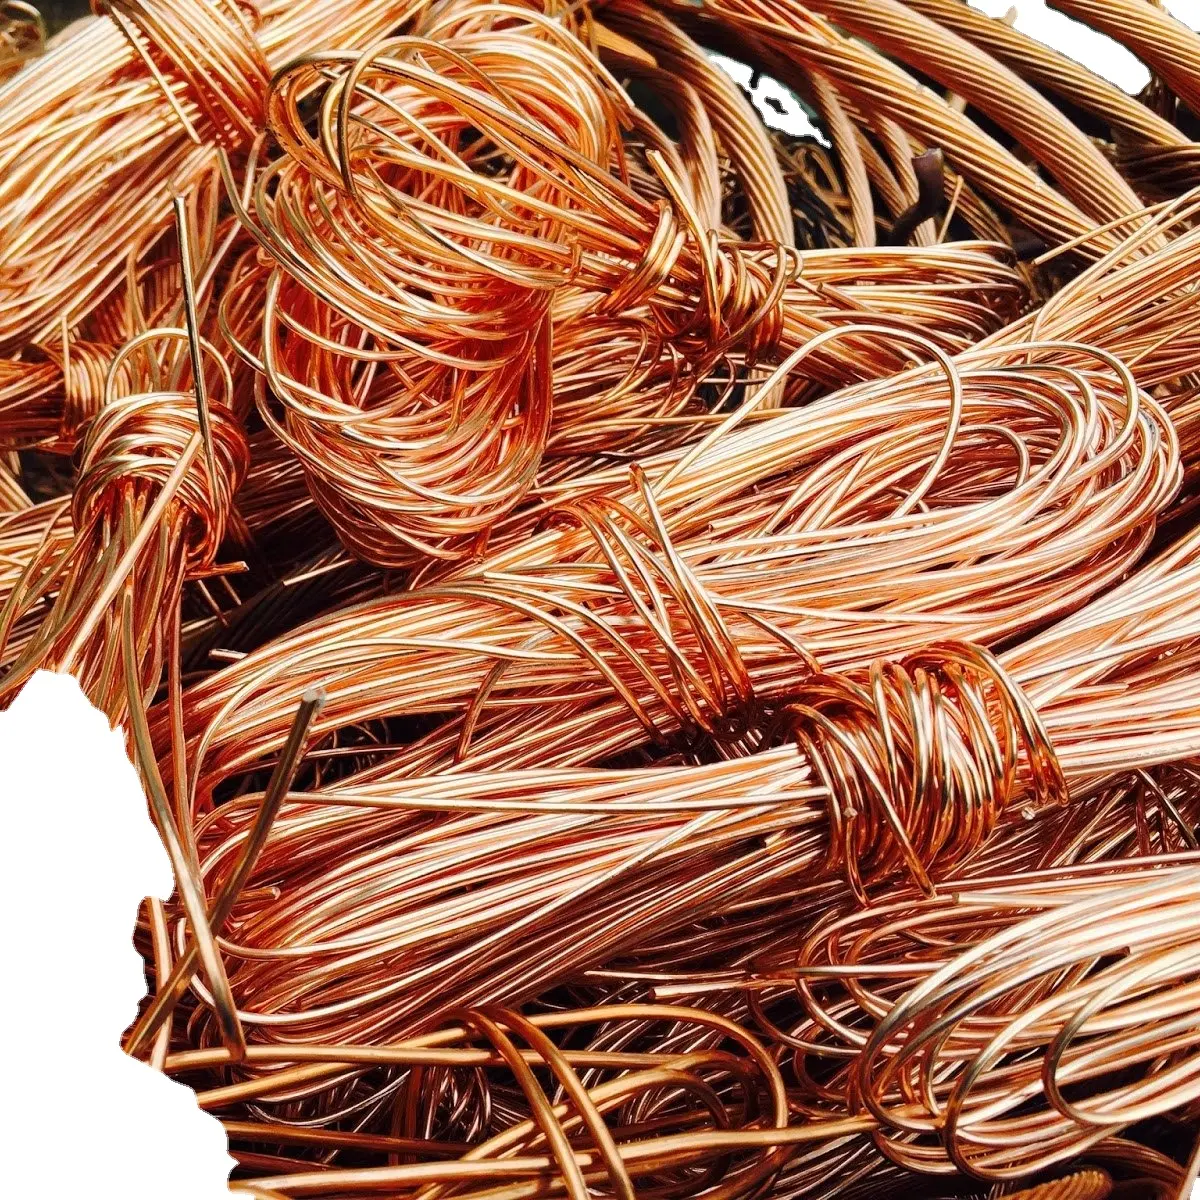 Chatarra de alambre de cobre de la mejor calidad y pureza a la venta